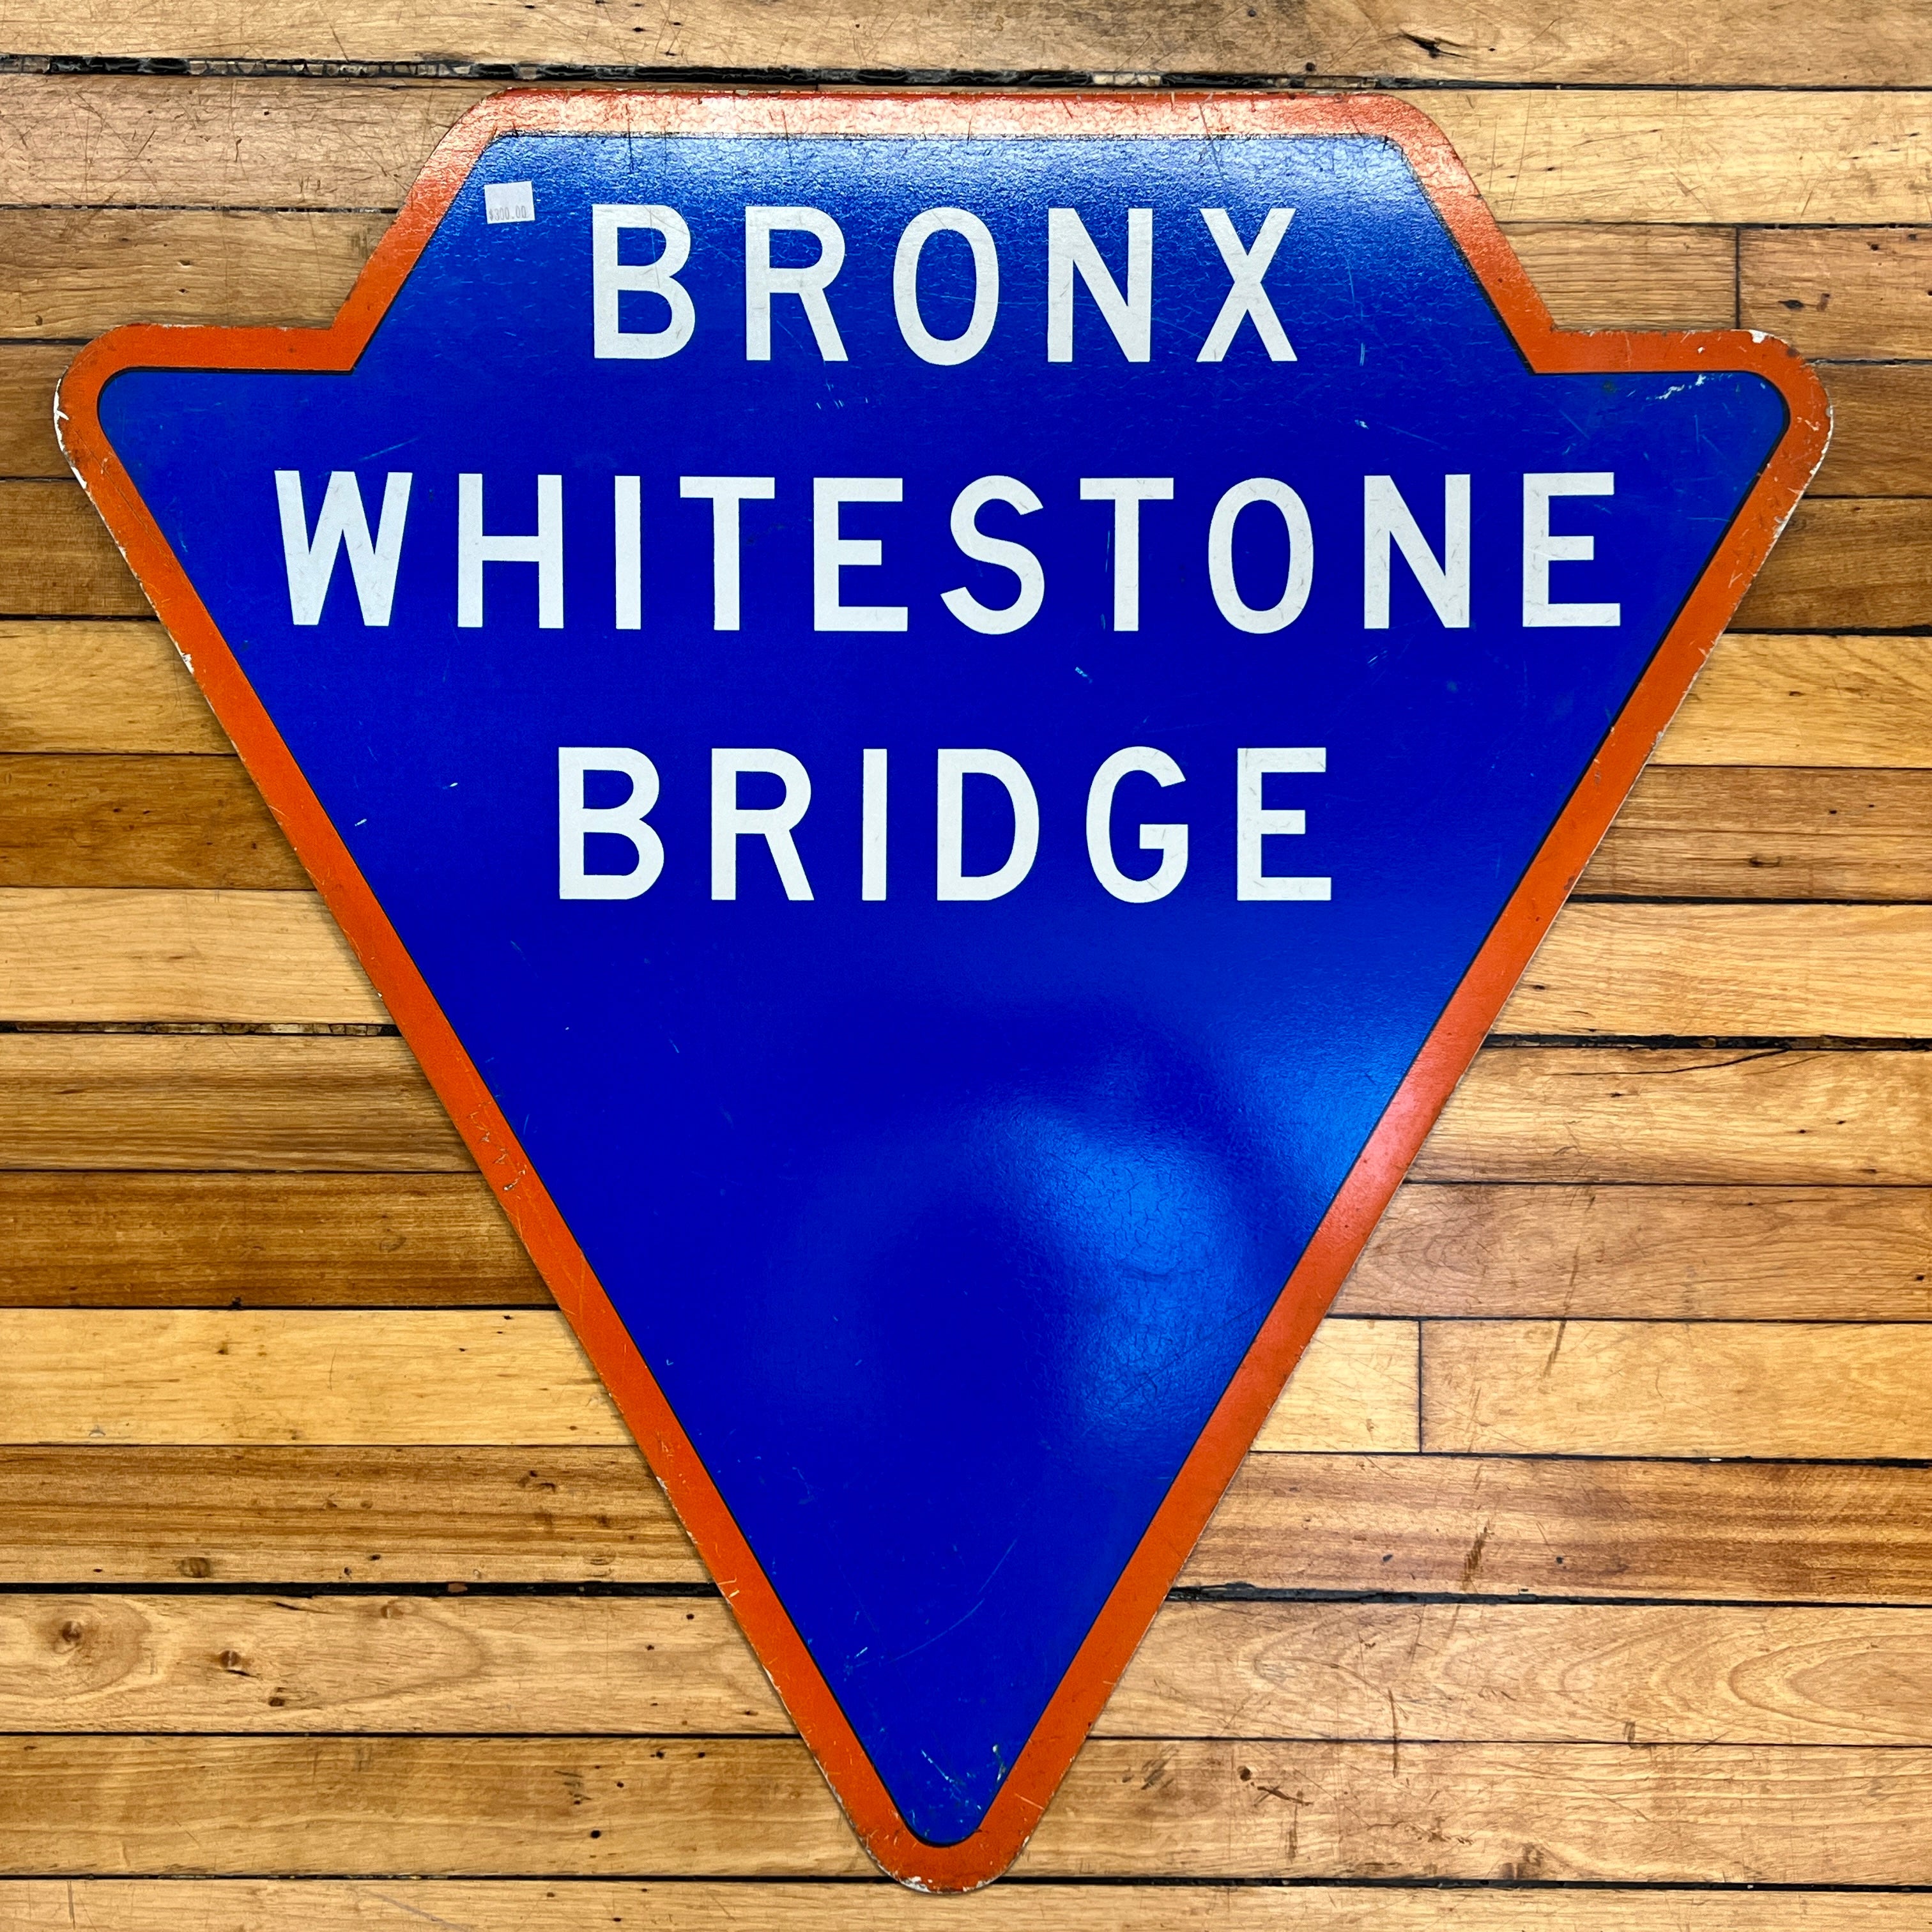 Bronx Whitestone Bridge, New York, NY Sign